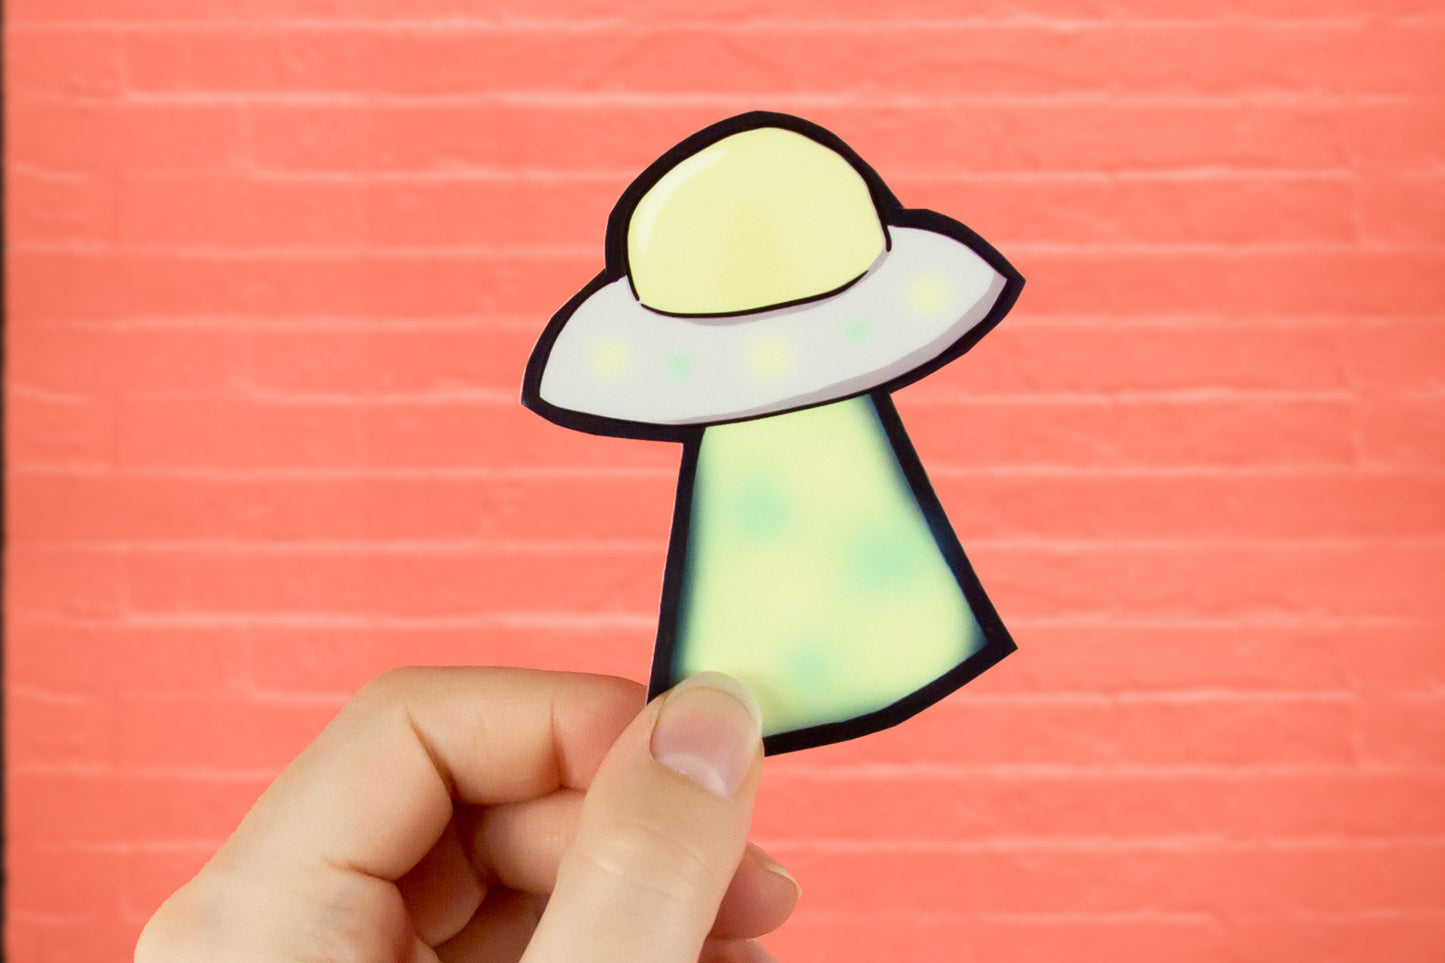 UFO Sticker Pack